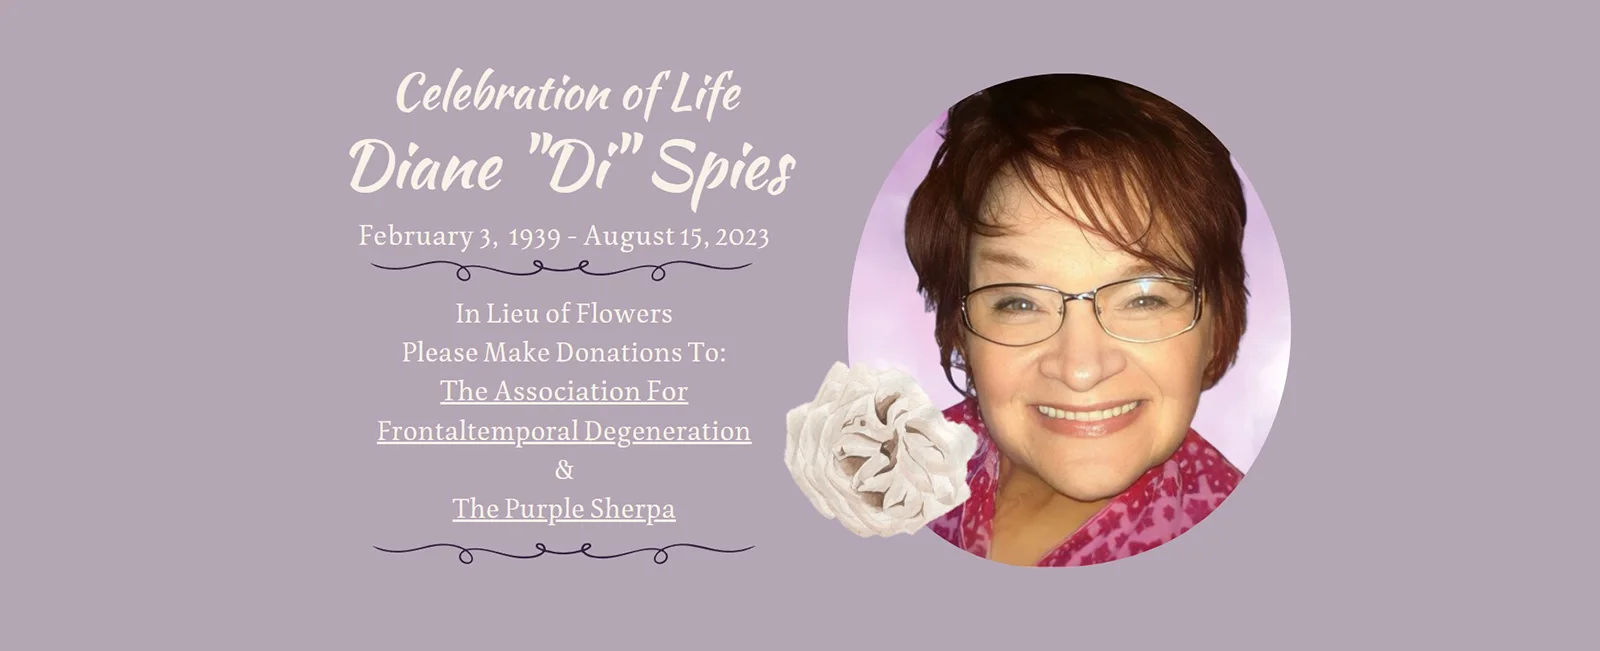 Celebration of Life Dianne Spies | Obituary image